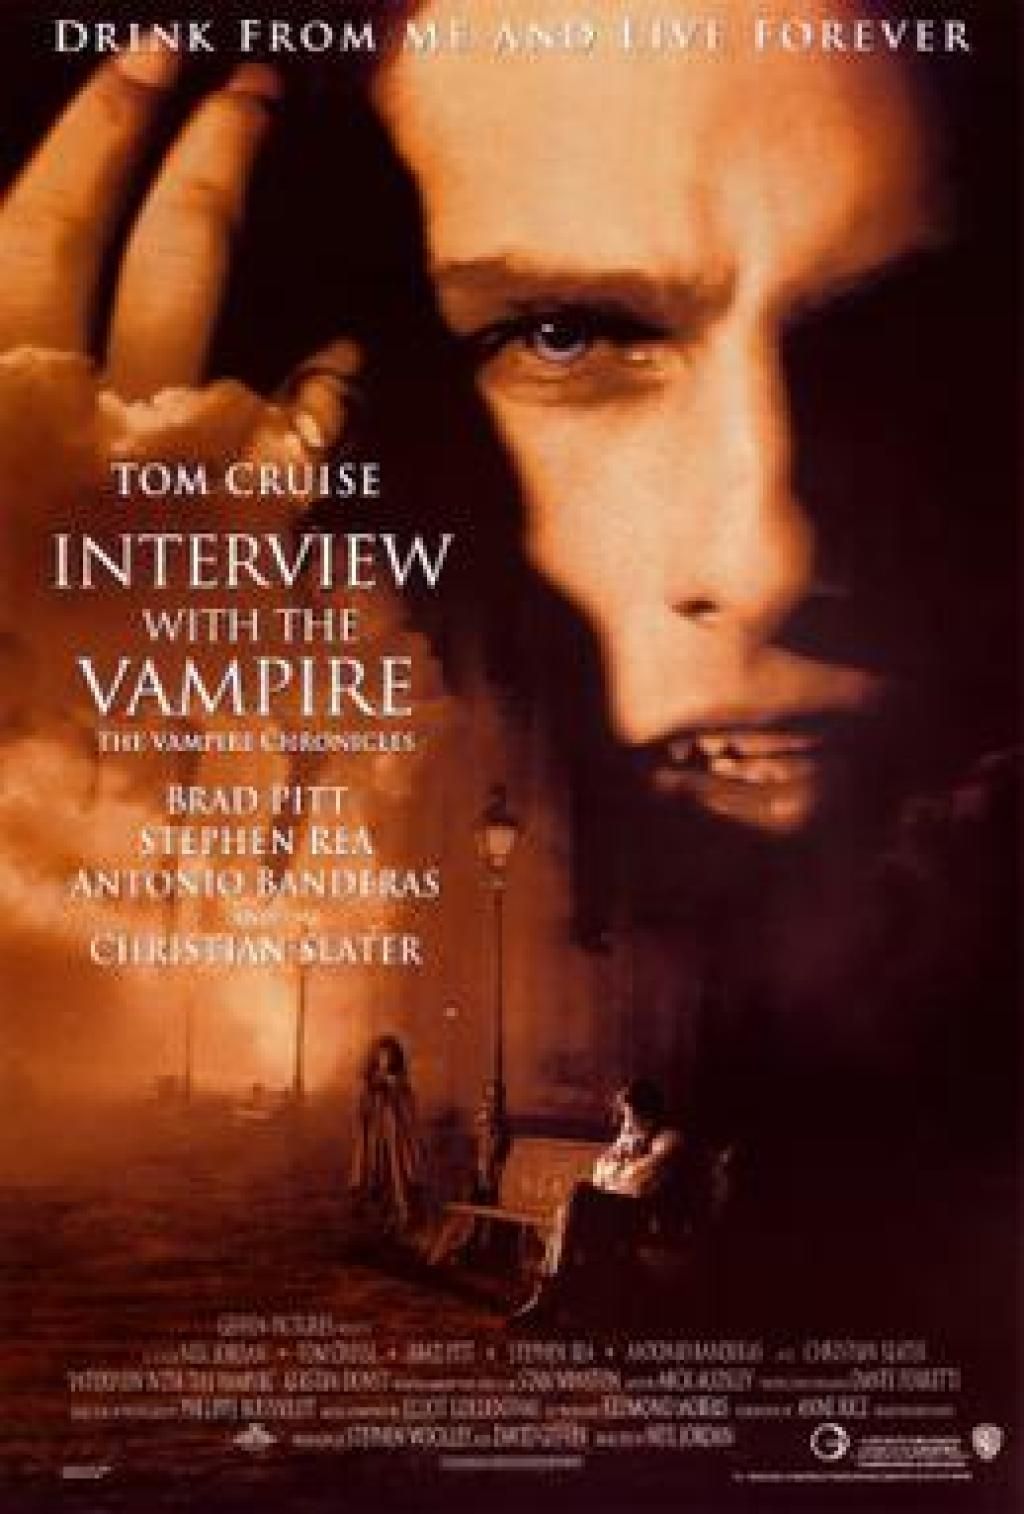 वैम्पायर के साथ टॉम क्रूज का साक्षात्कार